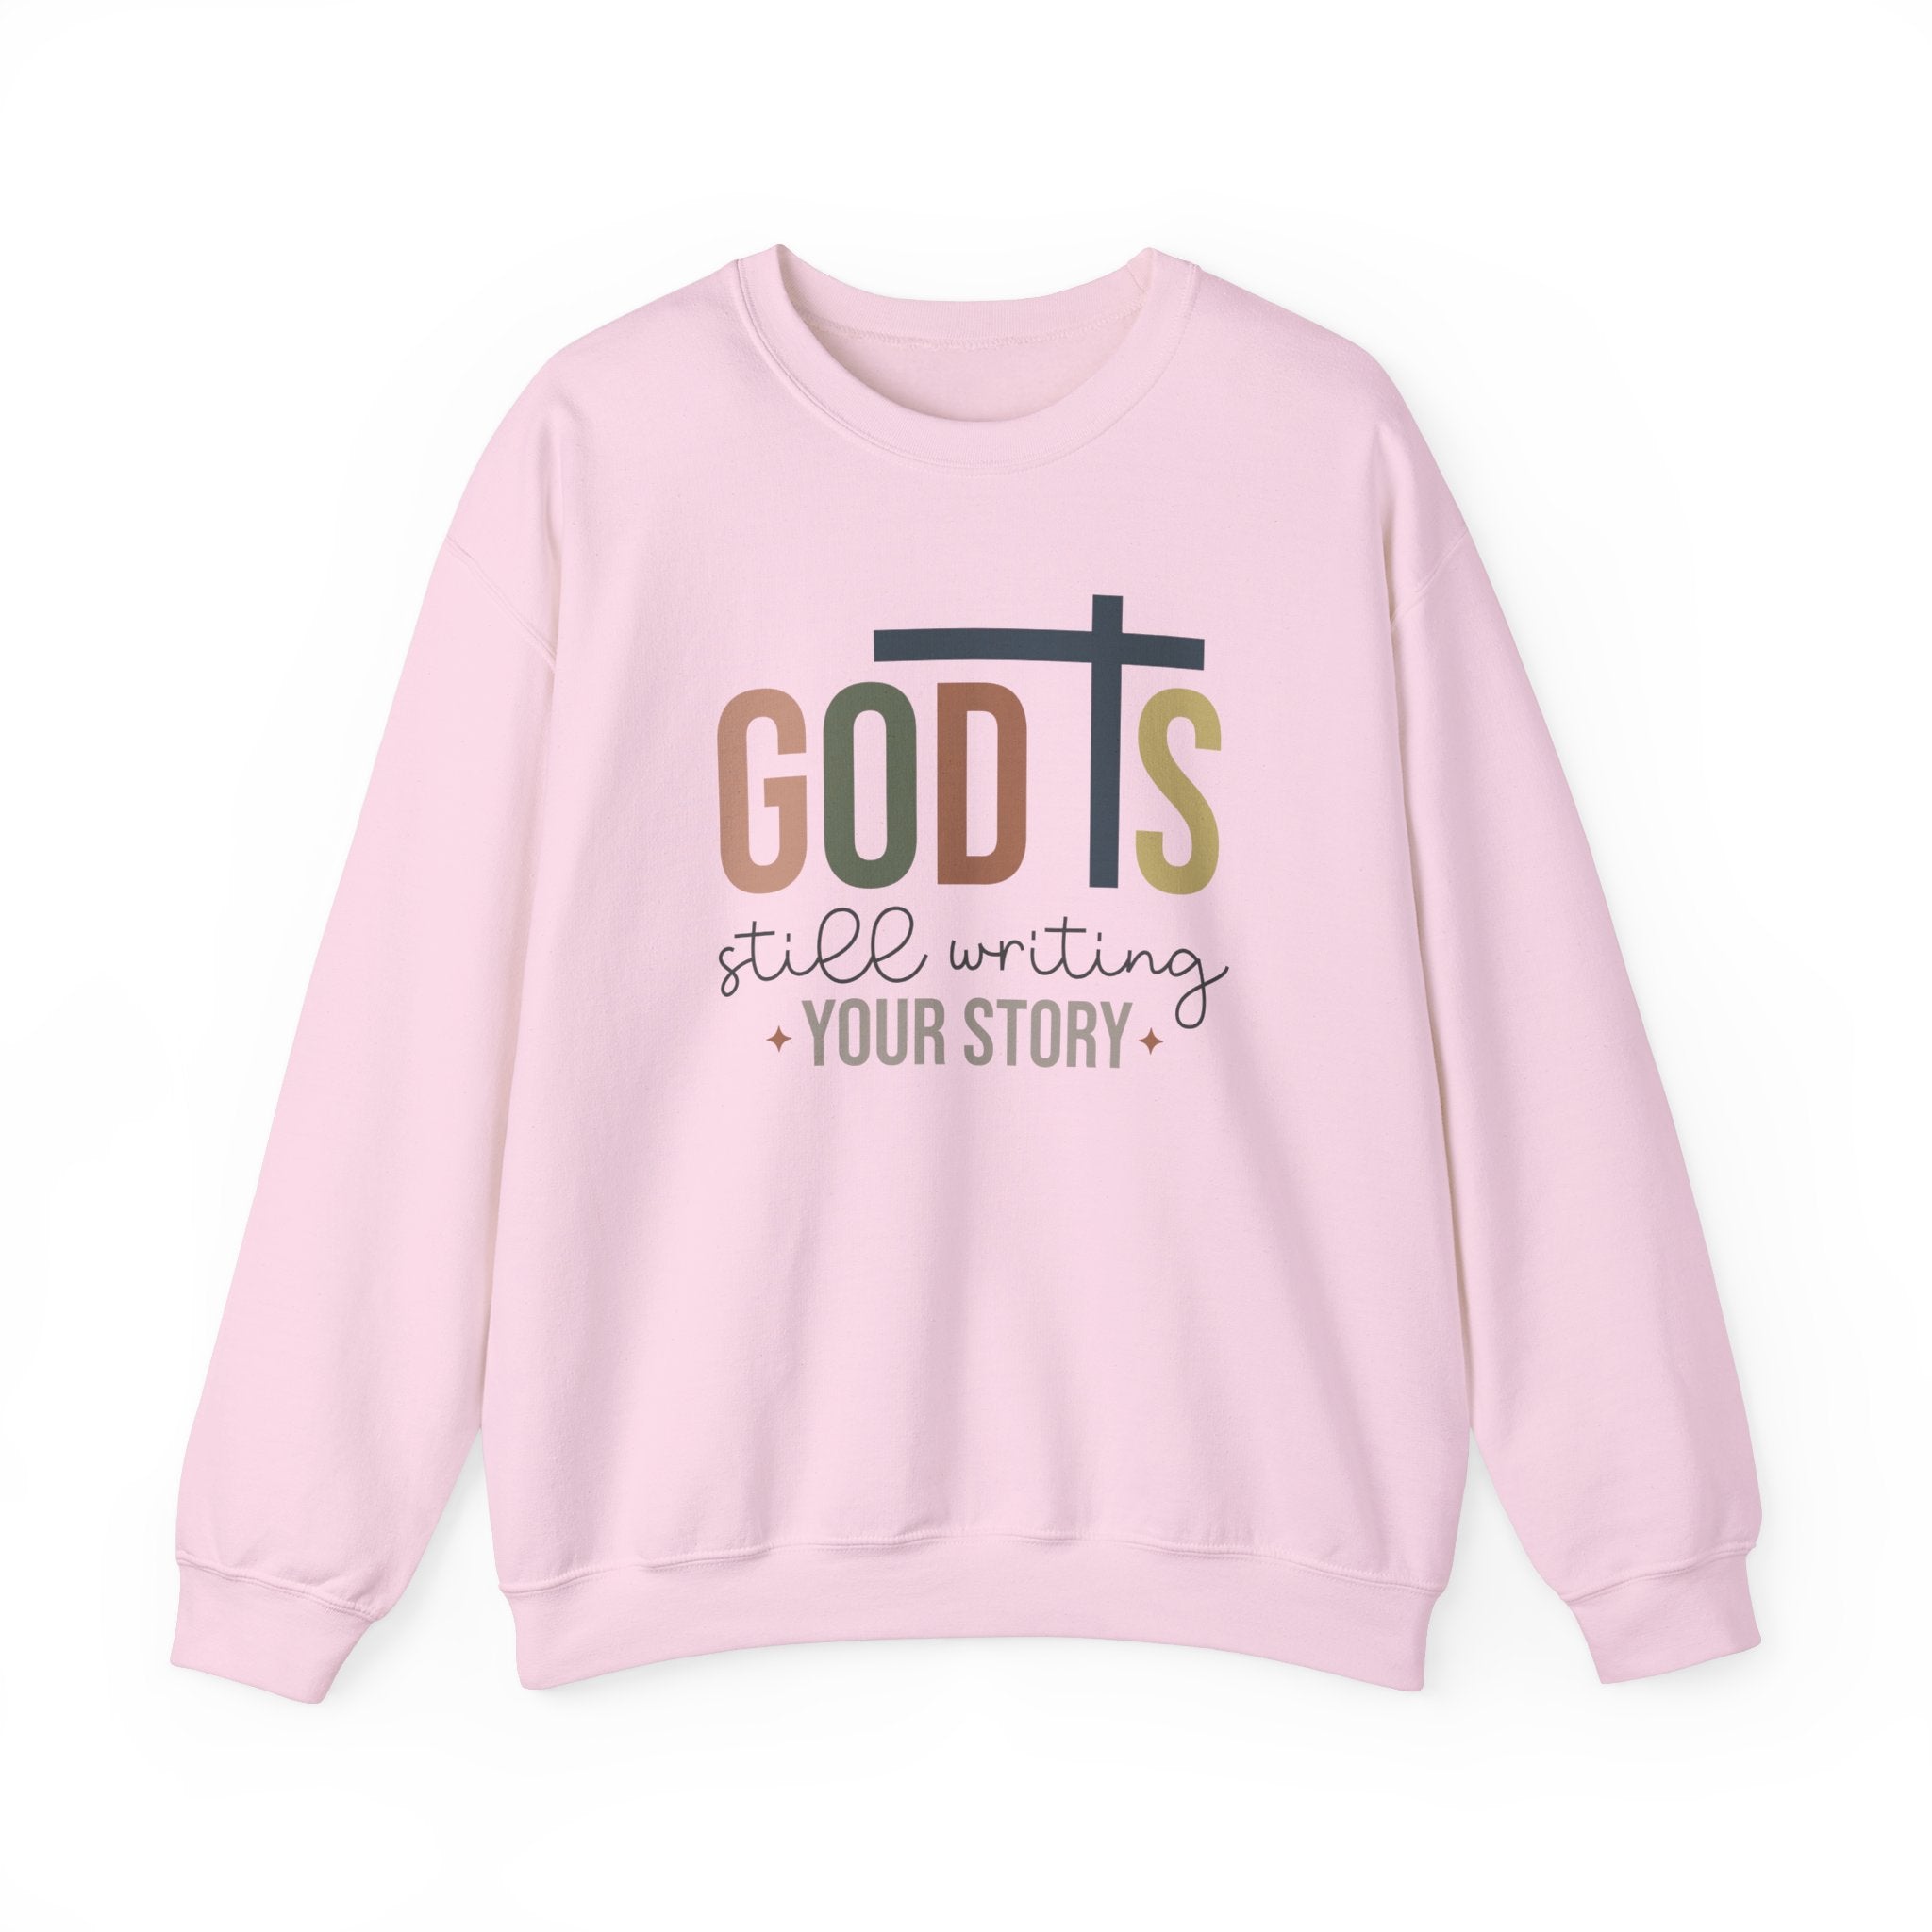 God is still writing your story ladies Heavy Blend Sweatshirt.